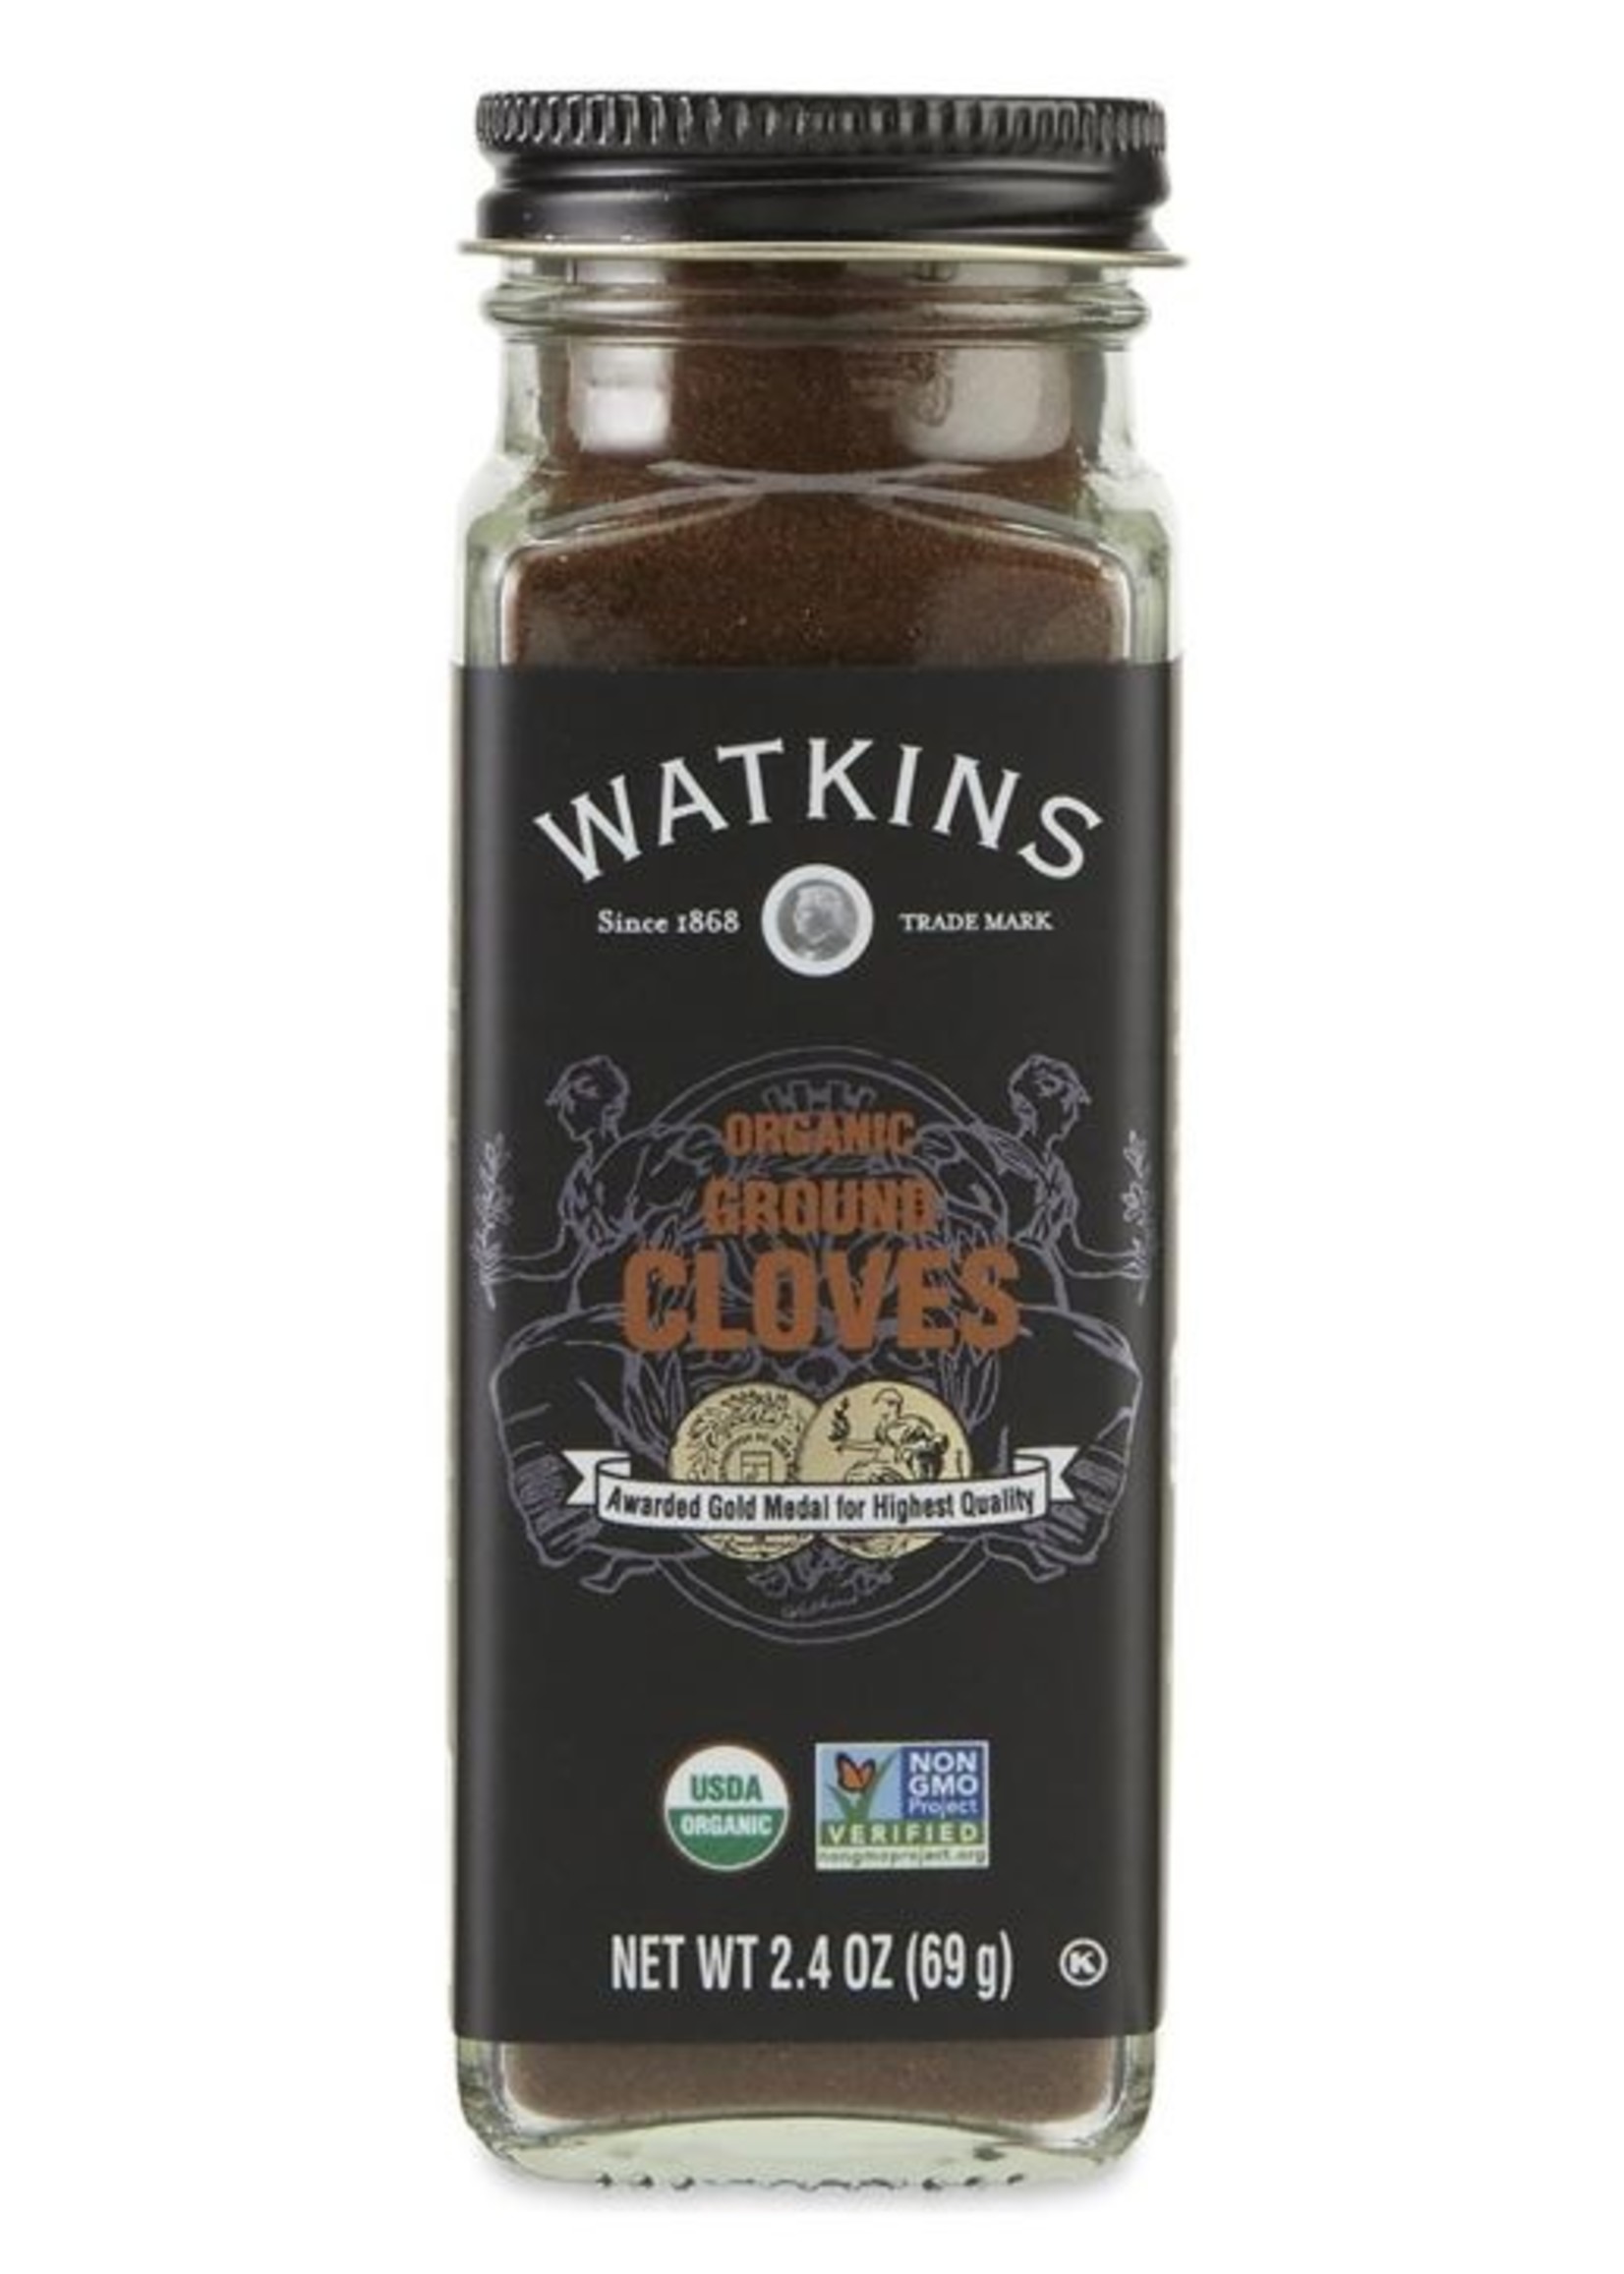 The Watkins Co. Watkins Organic Ground Cloves